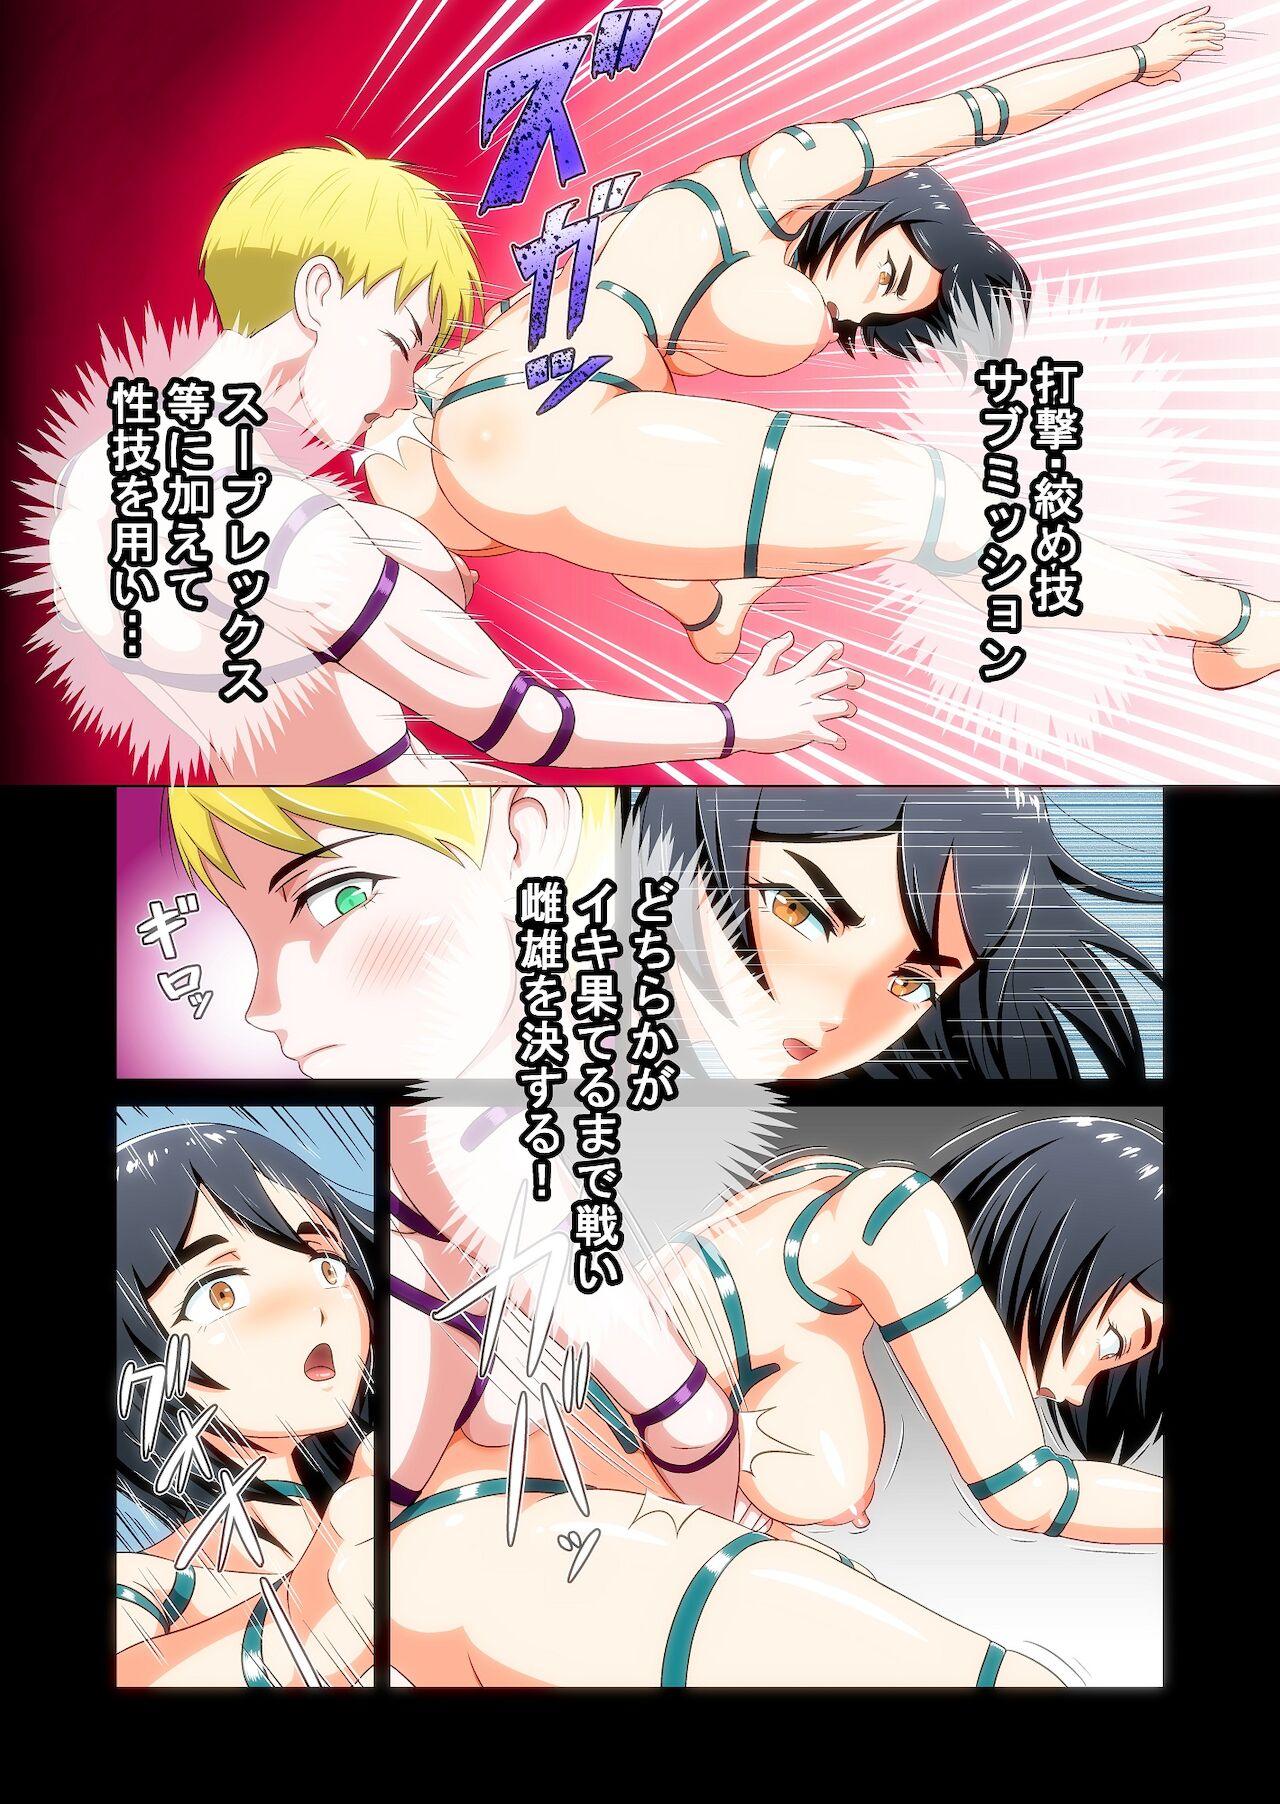 Butts futanari fight 4some - Page 7